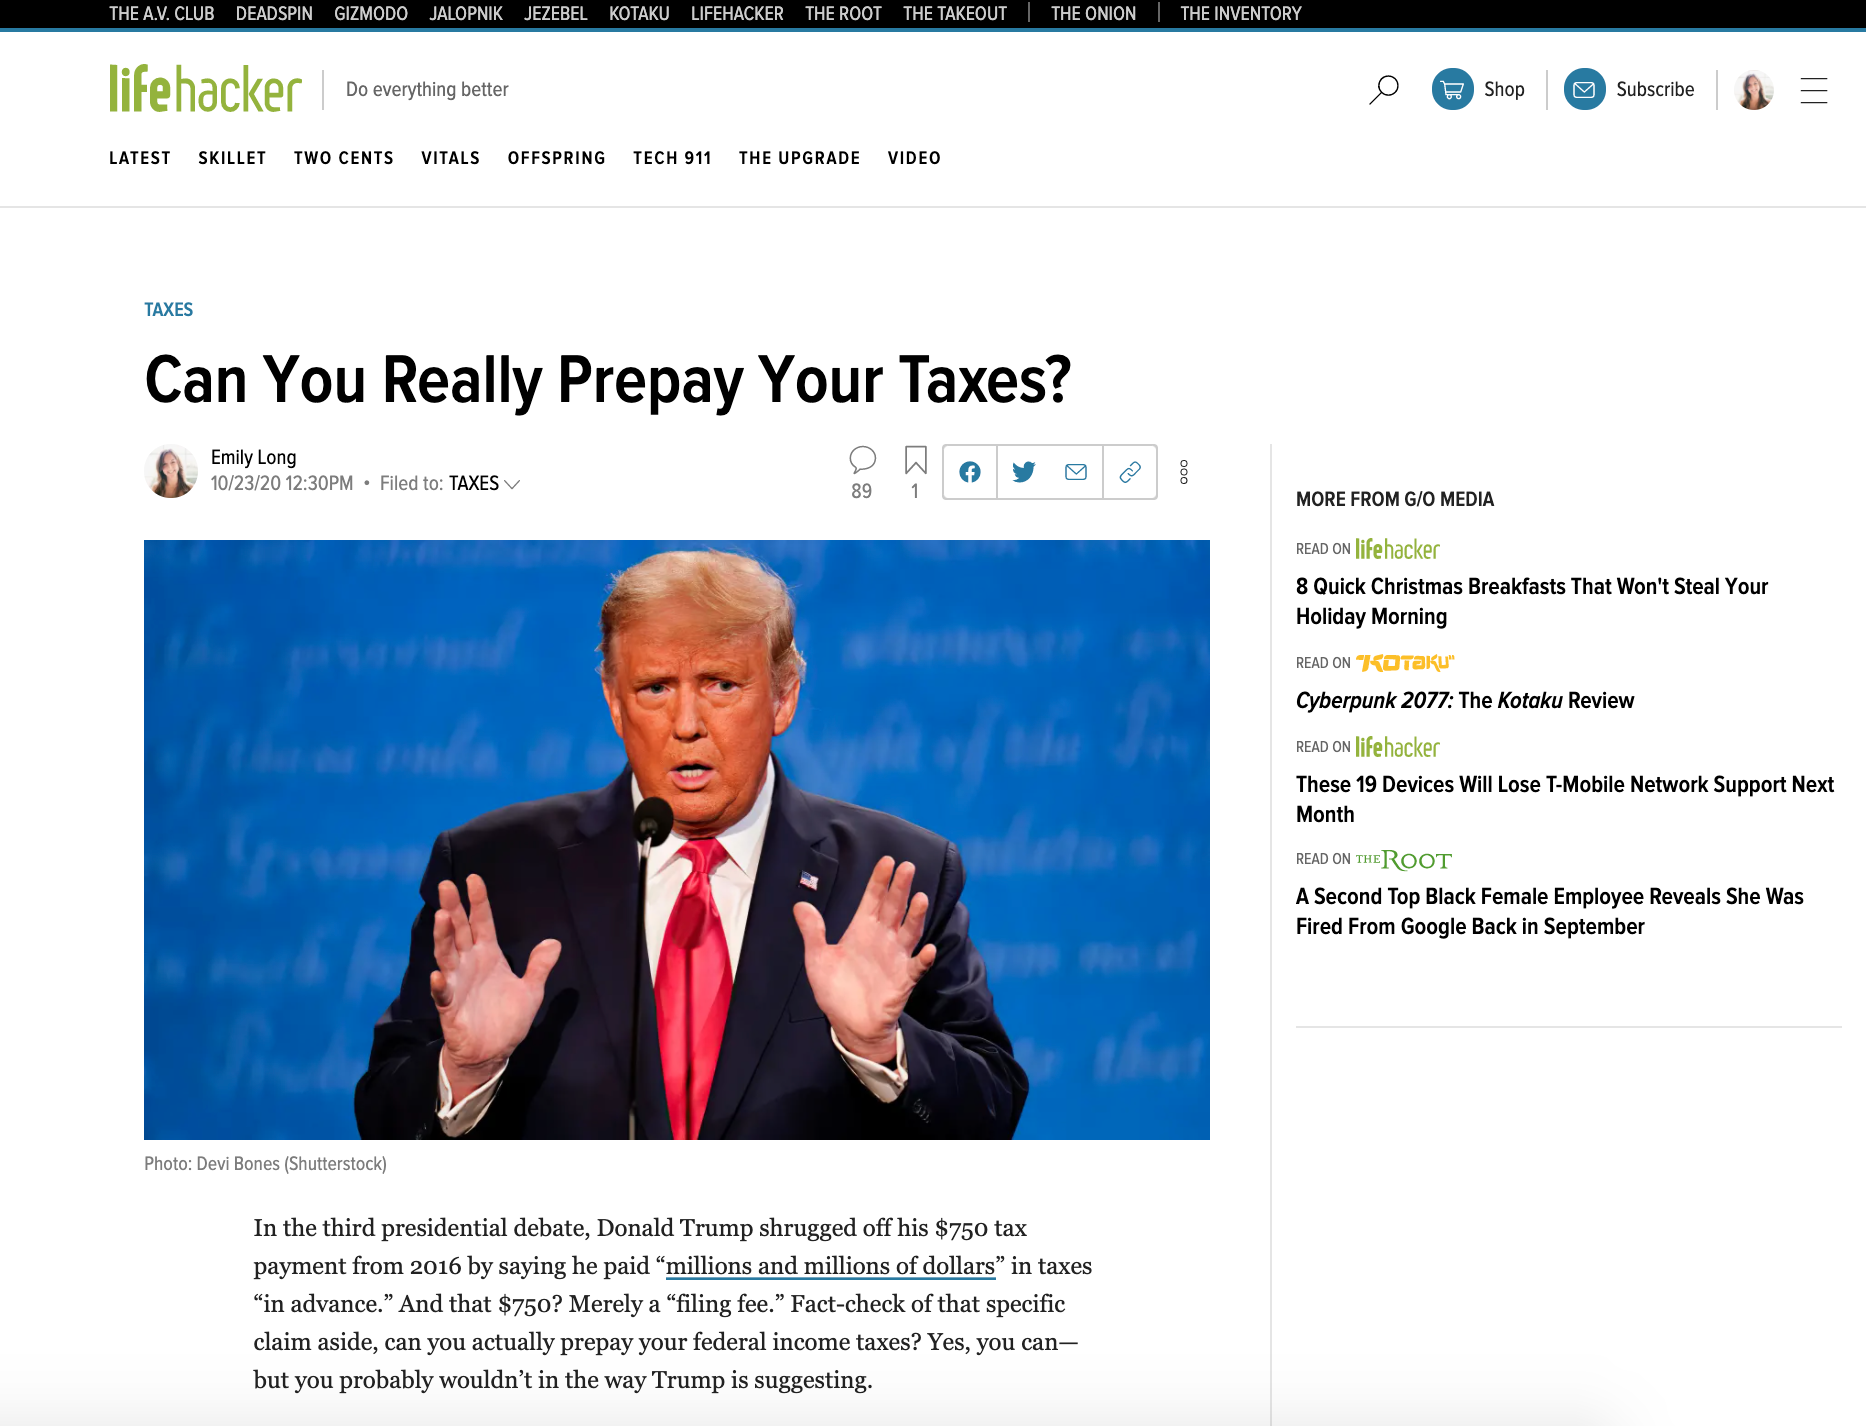 Lifehacker: Can You Really Prepay Your Taxes?